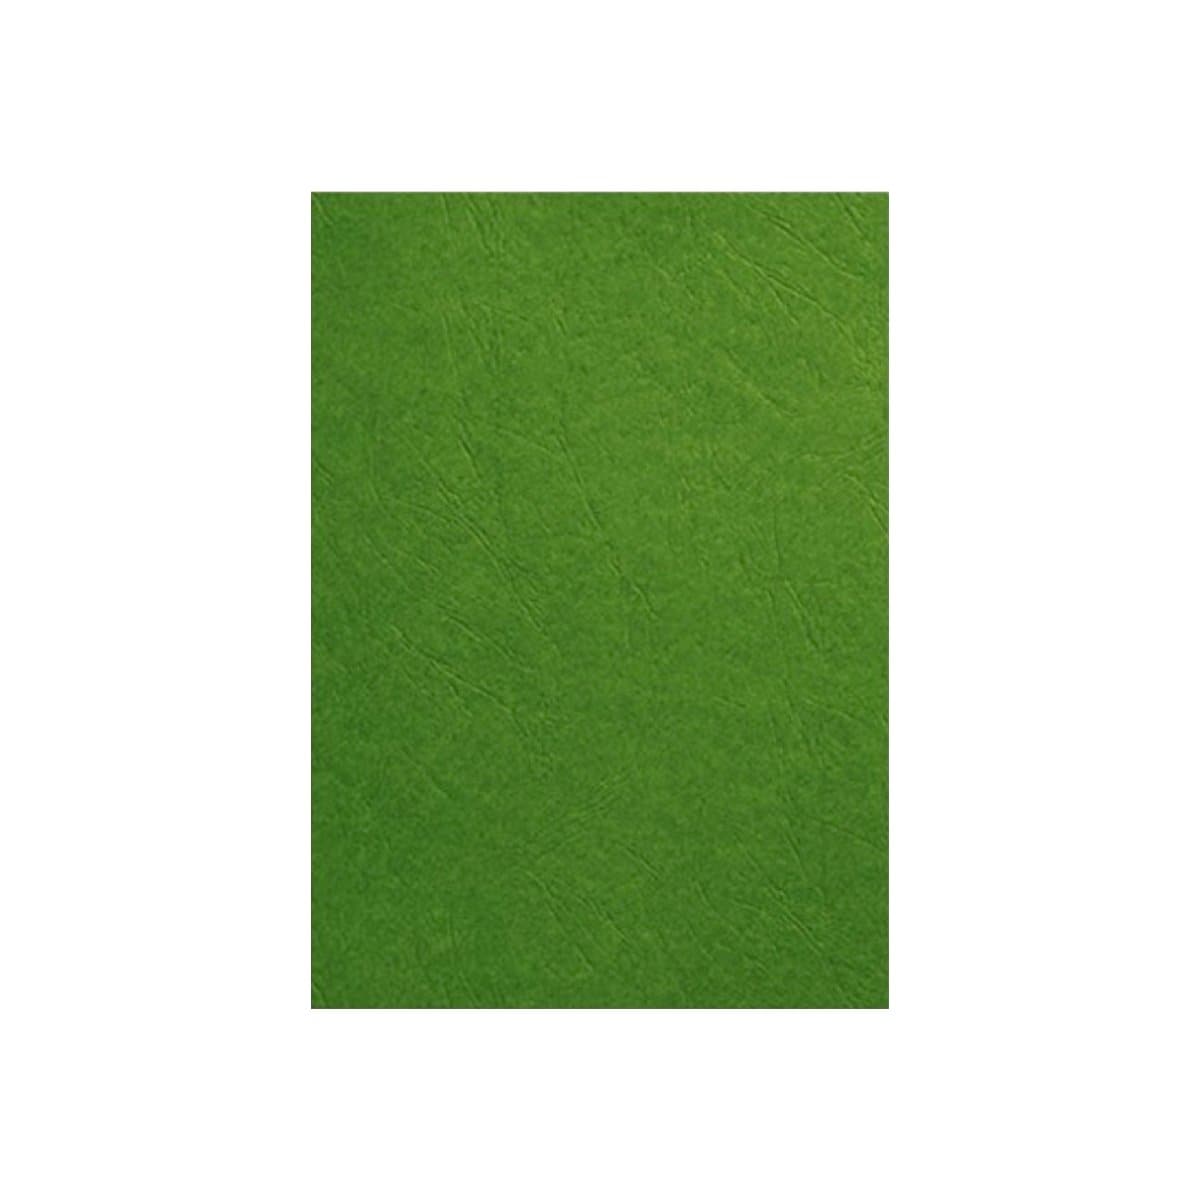 Foldex A4 Binding Cover, 230gsm, 100/pack, Green